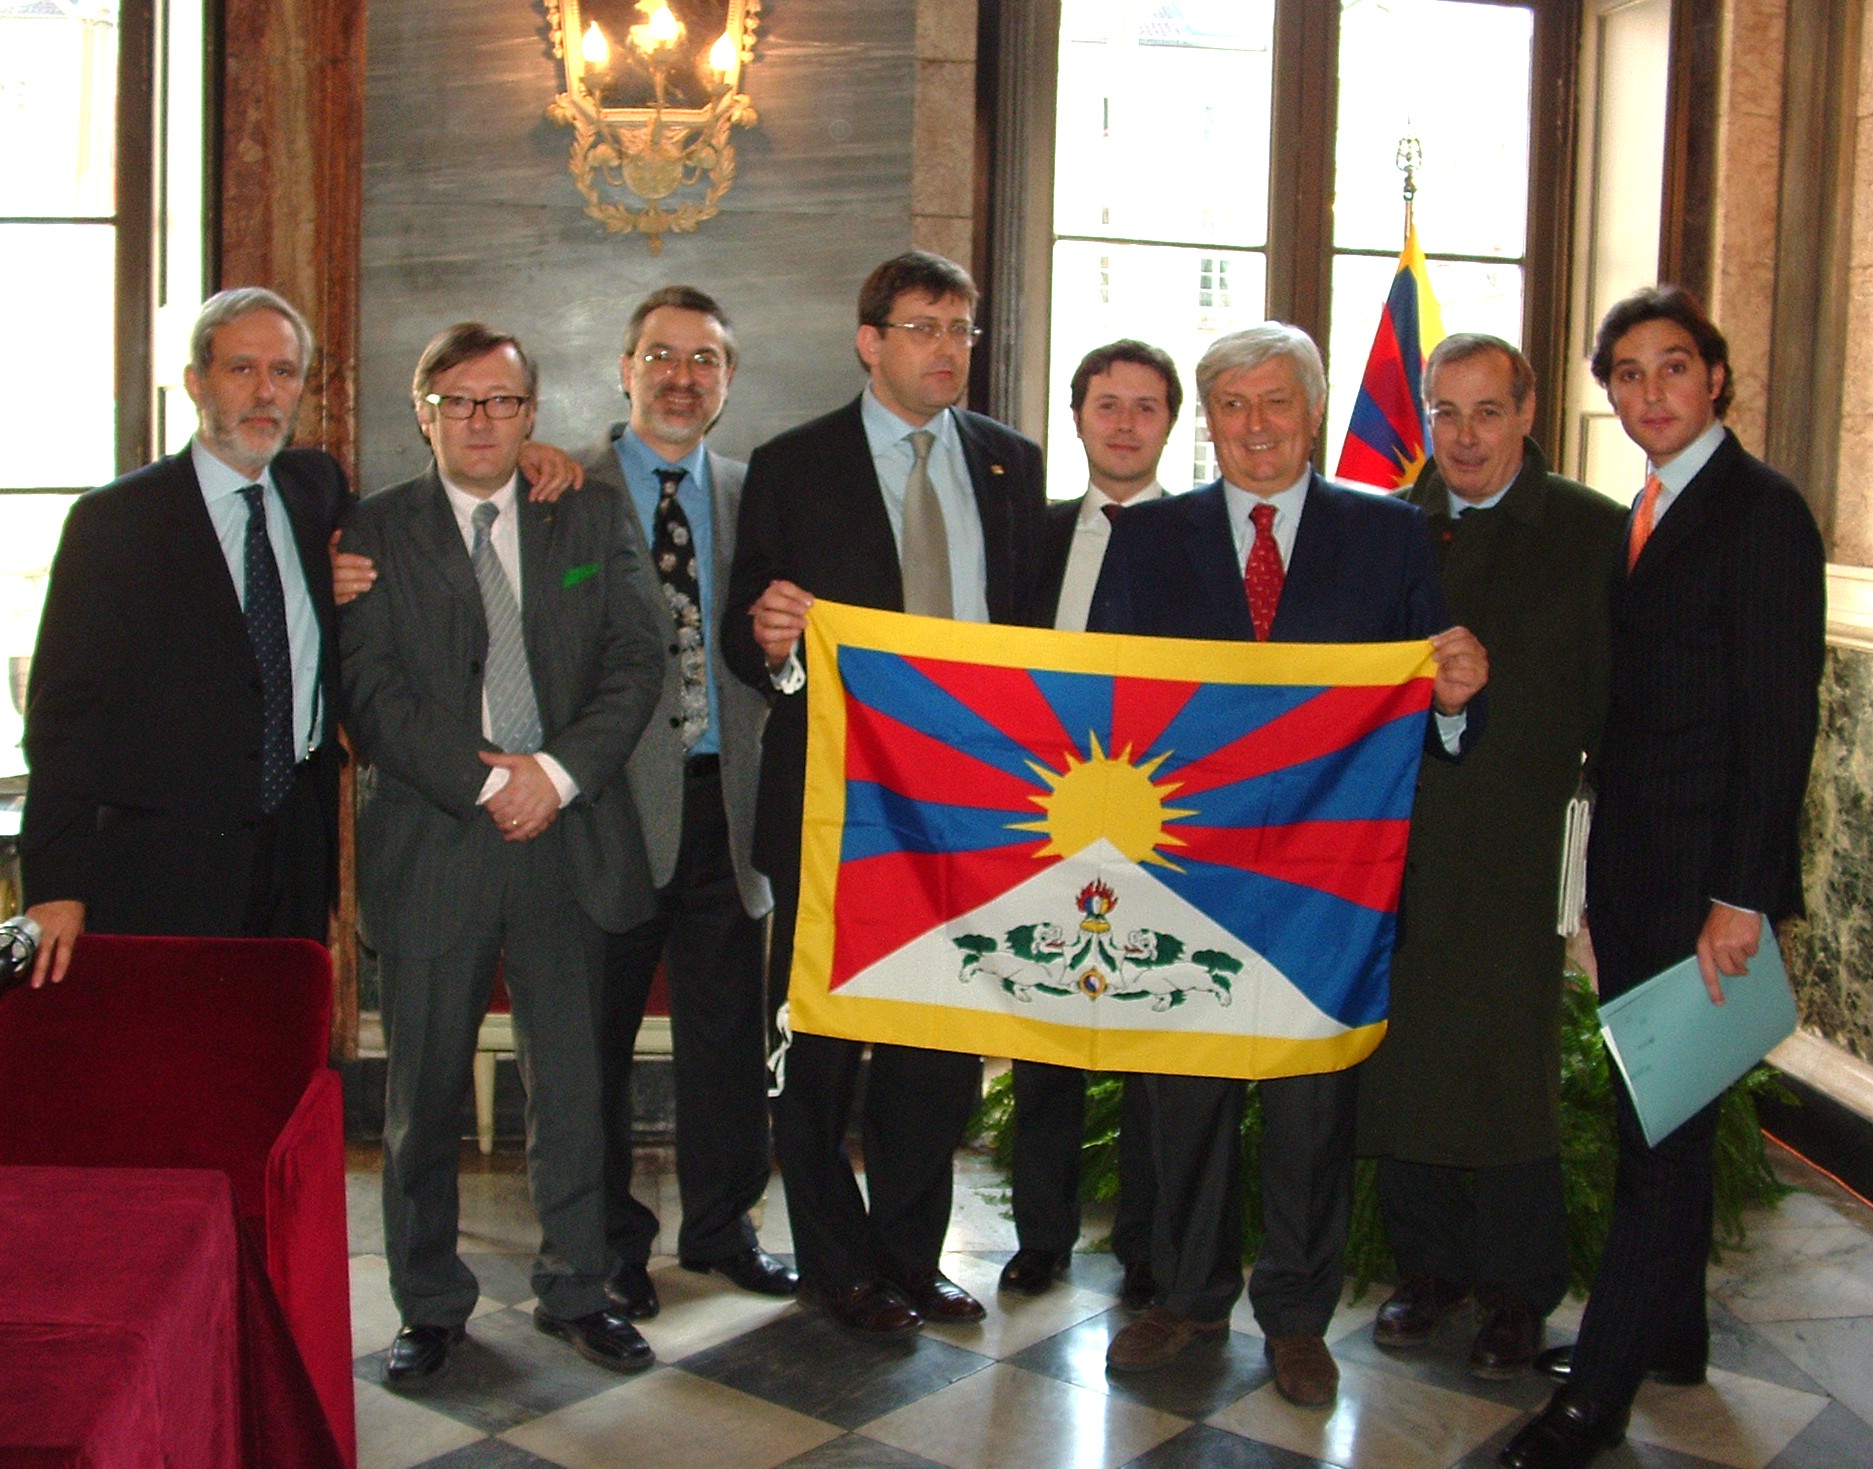 bandiera tibetana in Comune